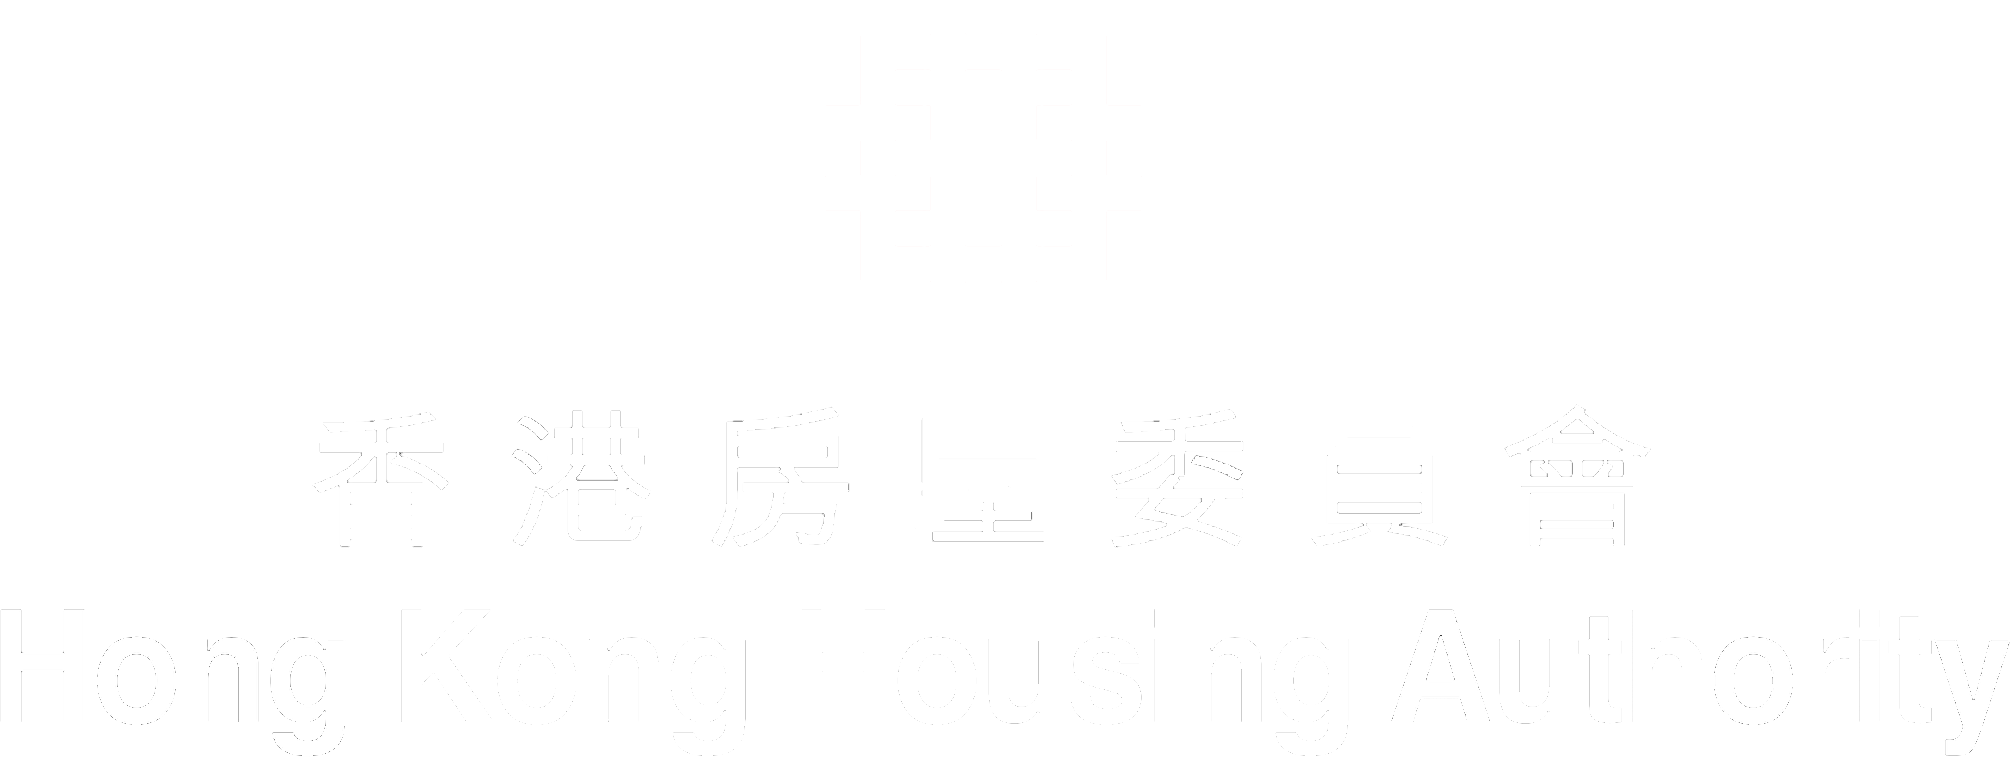 香港房屋委員會 Hong Kong Housing Authority